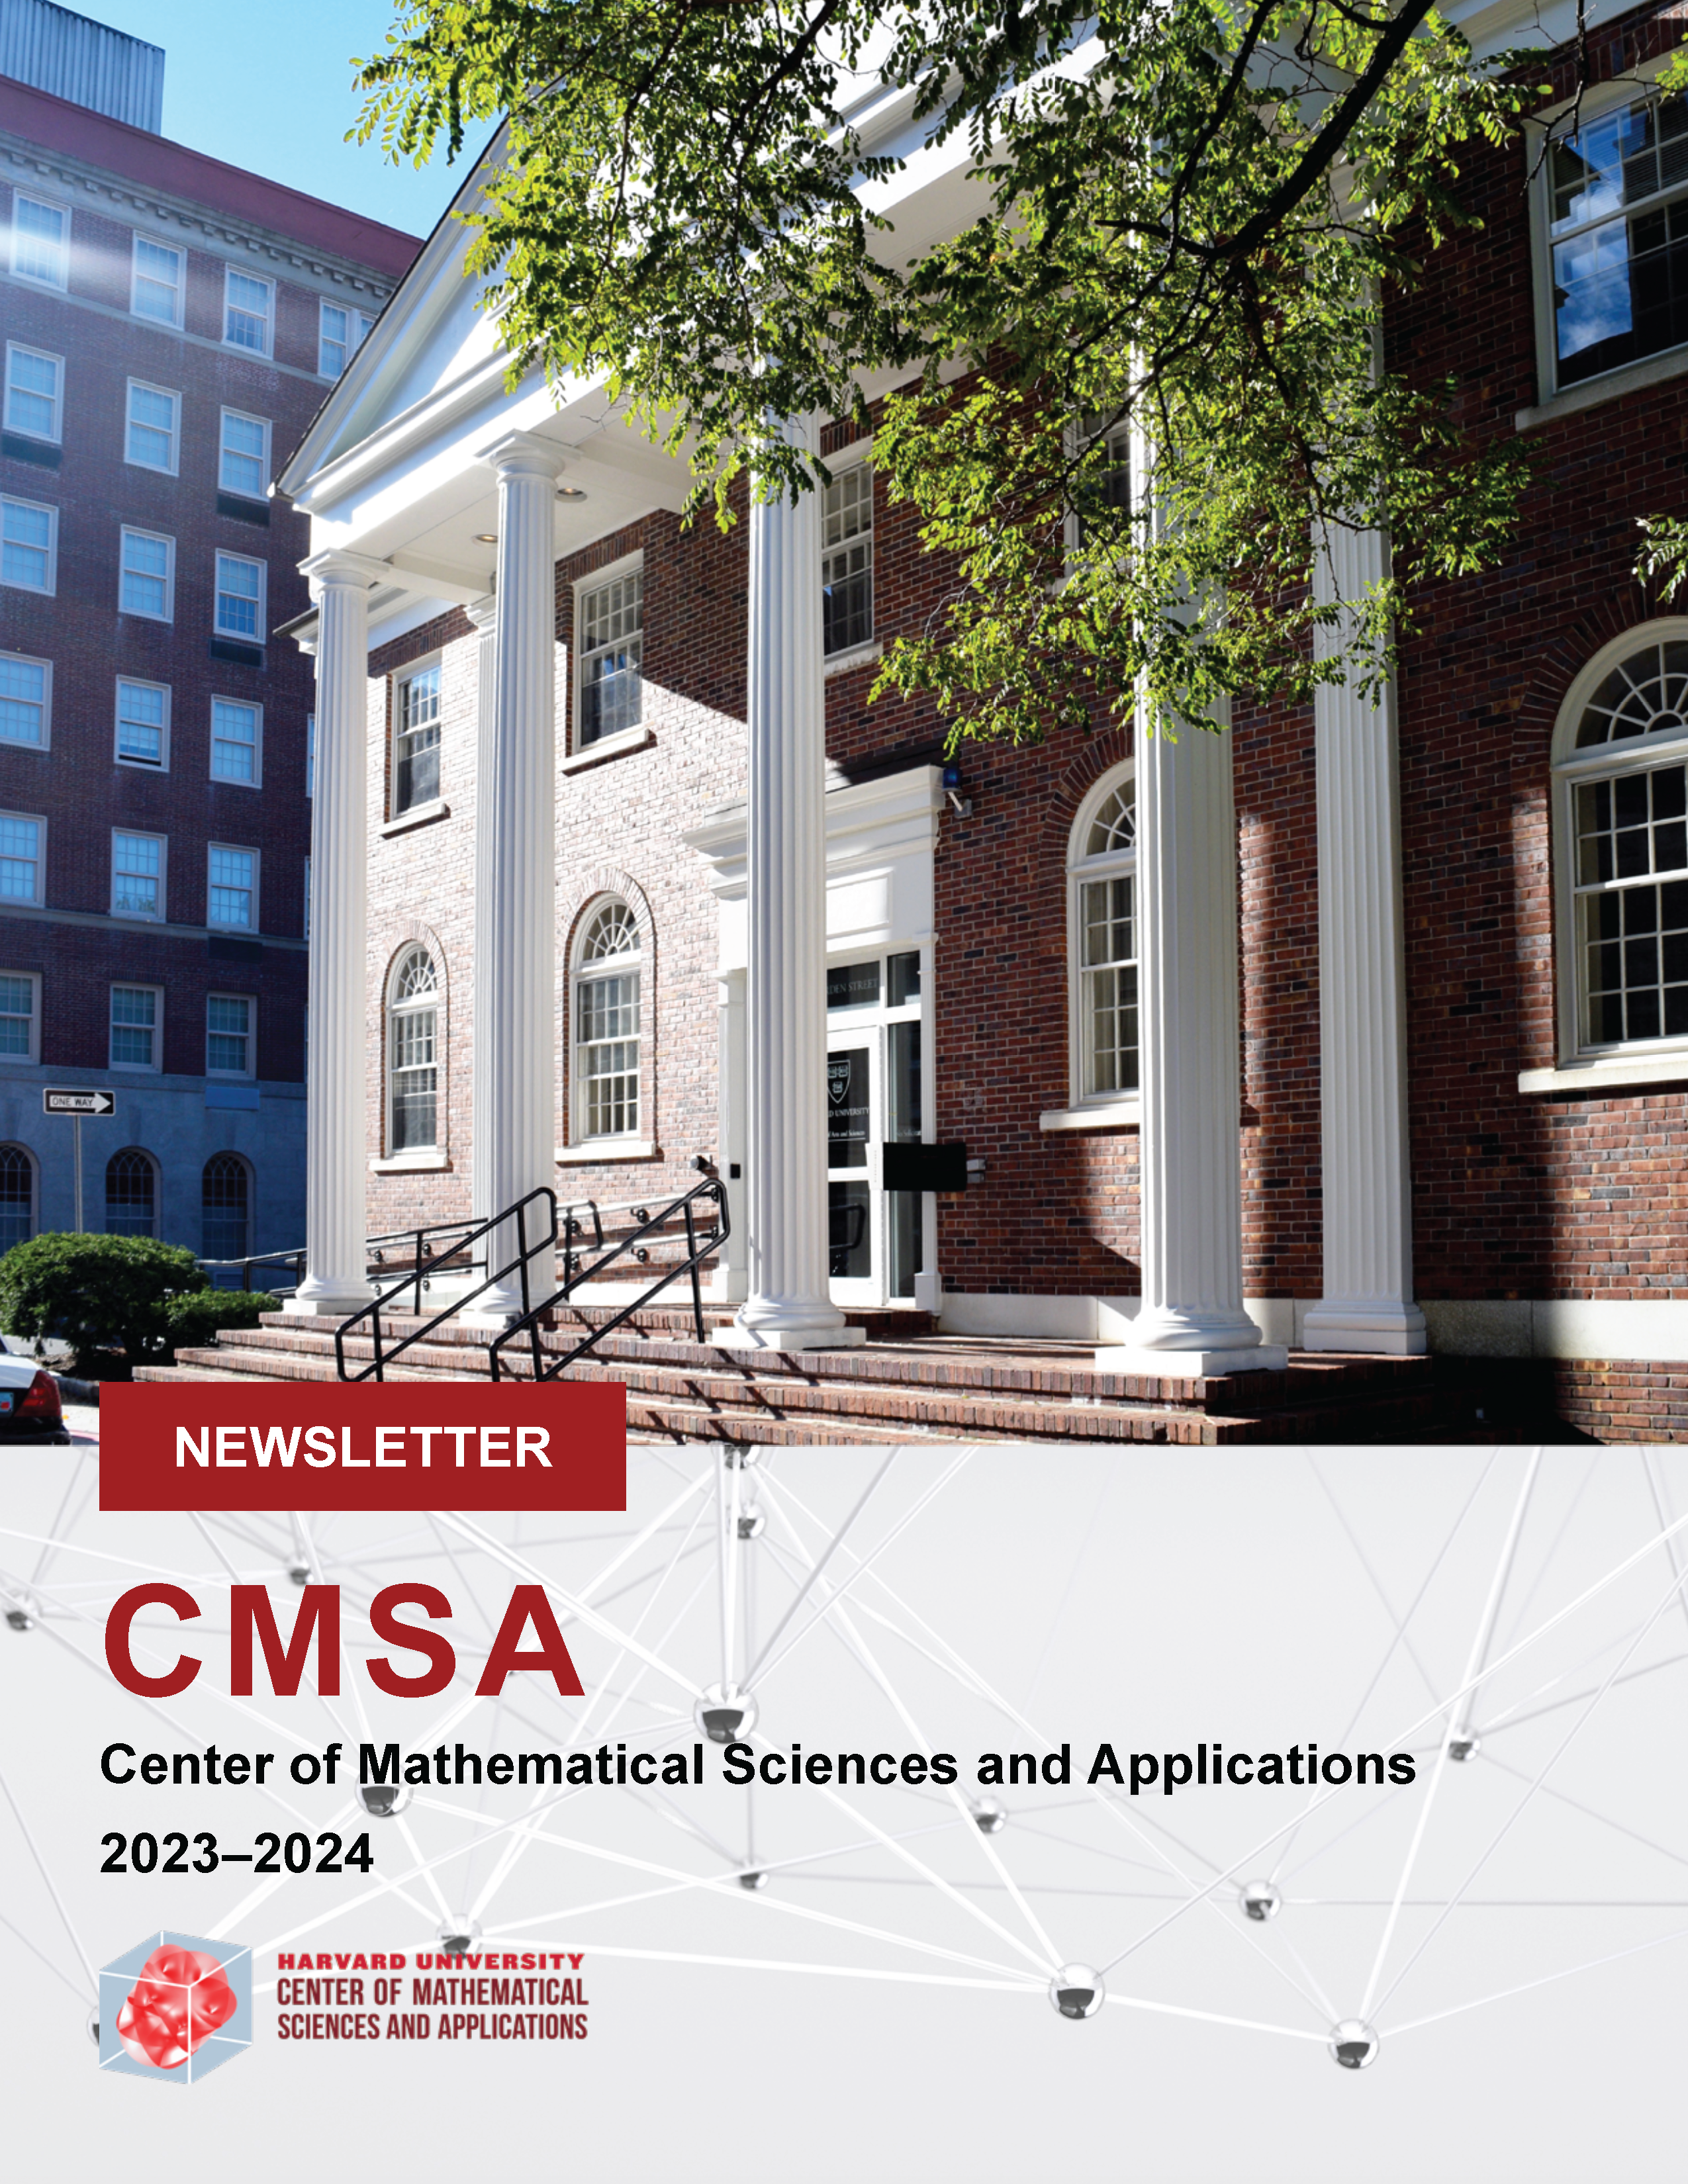 CMSA 2023-2024 Newsletter